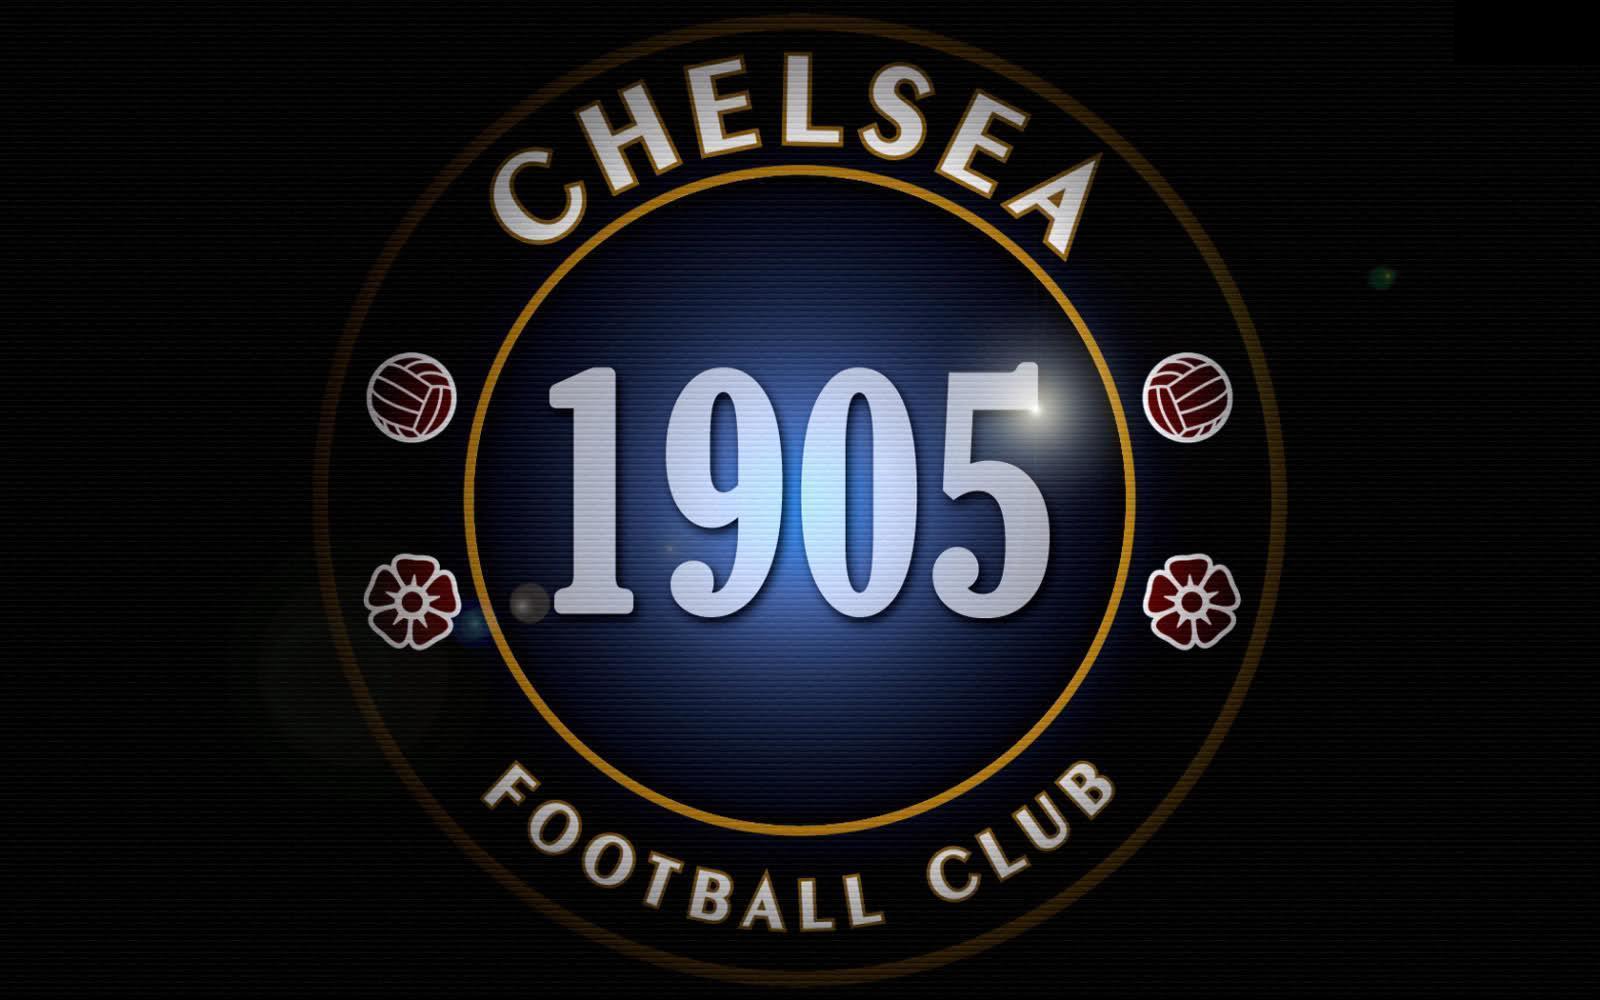 Chelsea Football Club Wallpaper